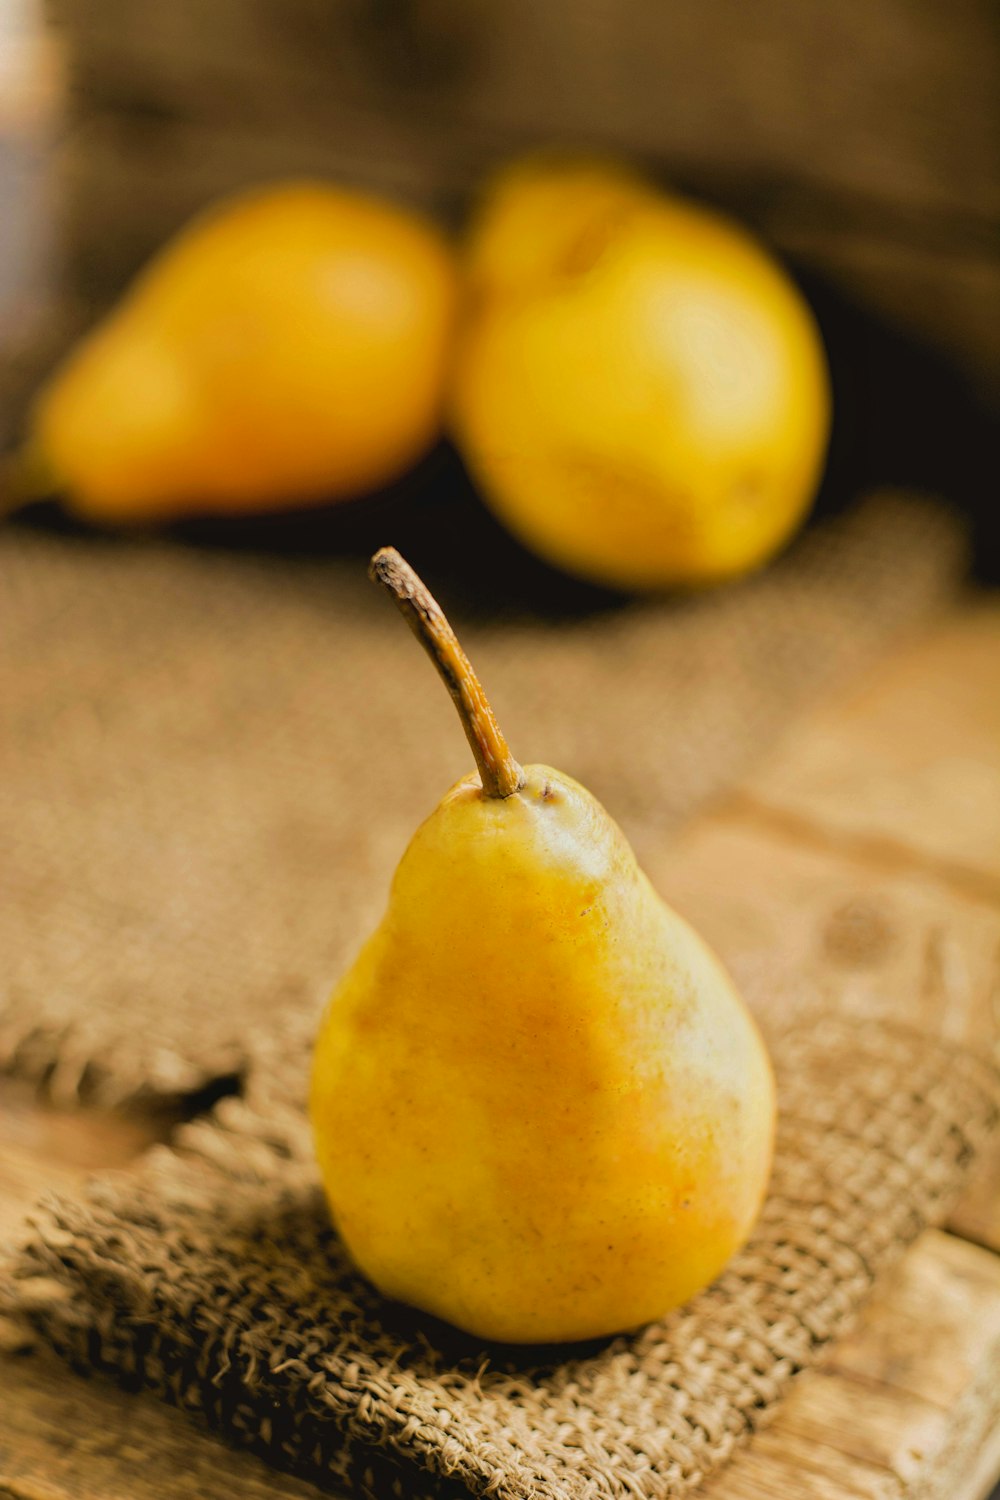 yellow lemon fruit on brown textile